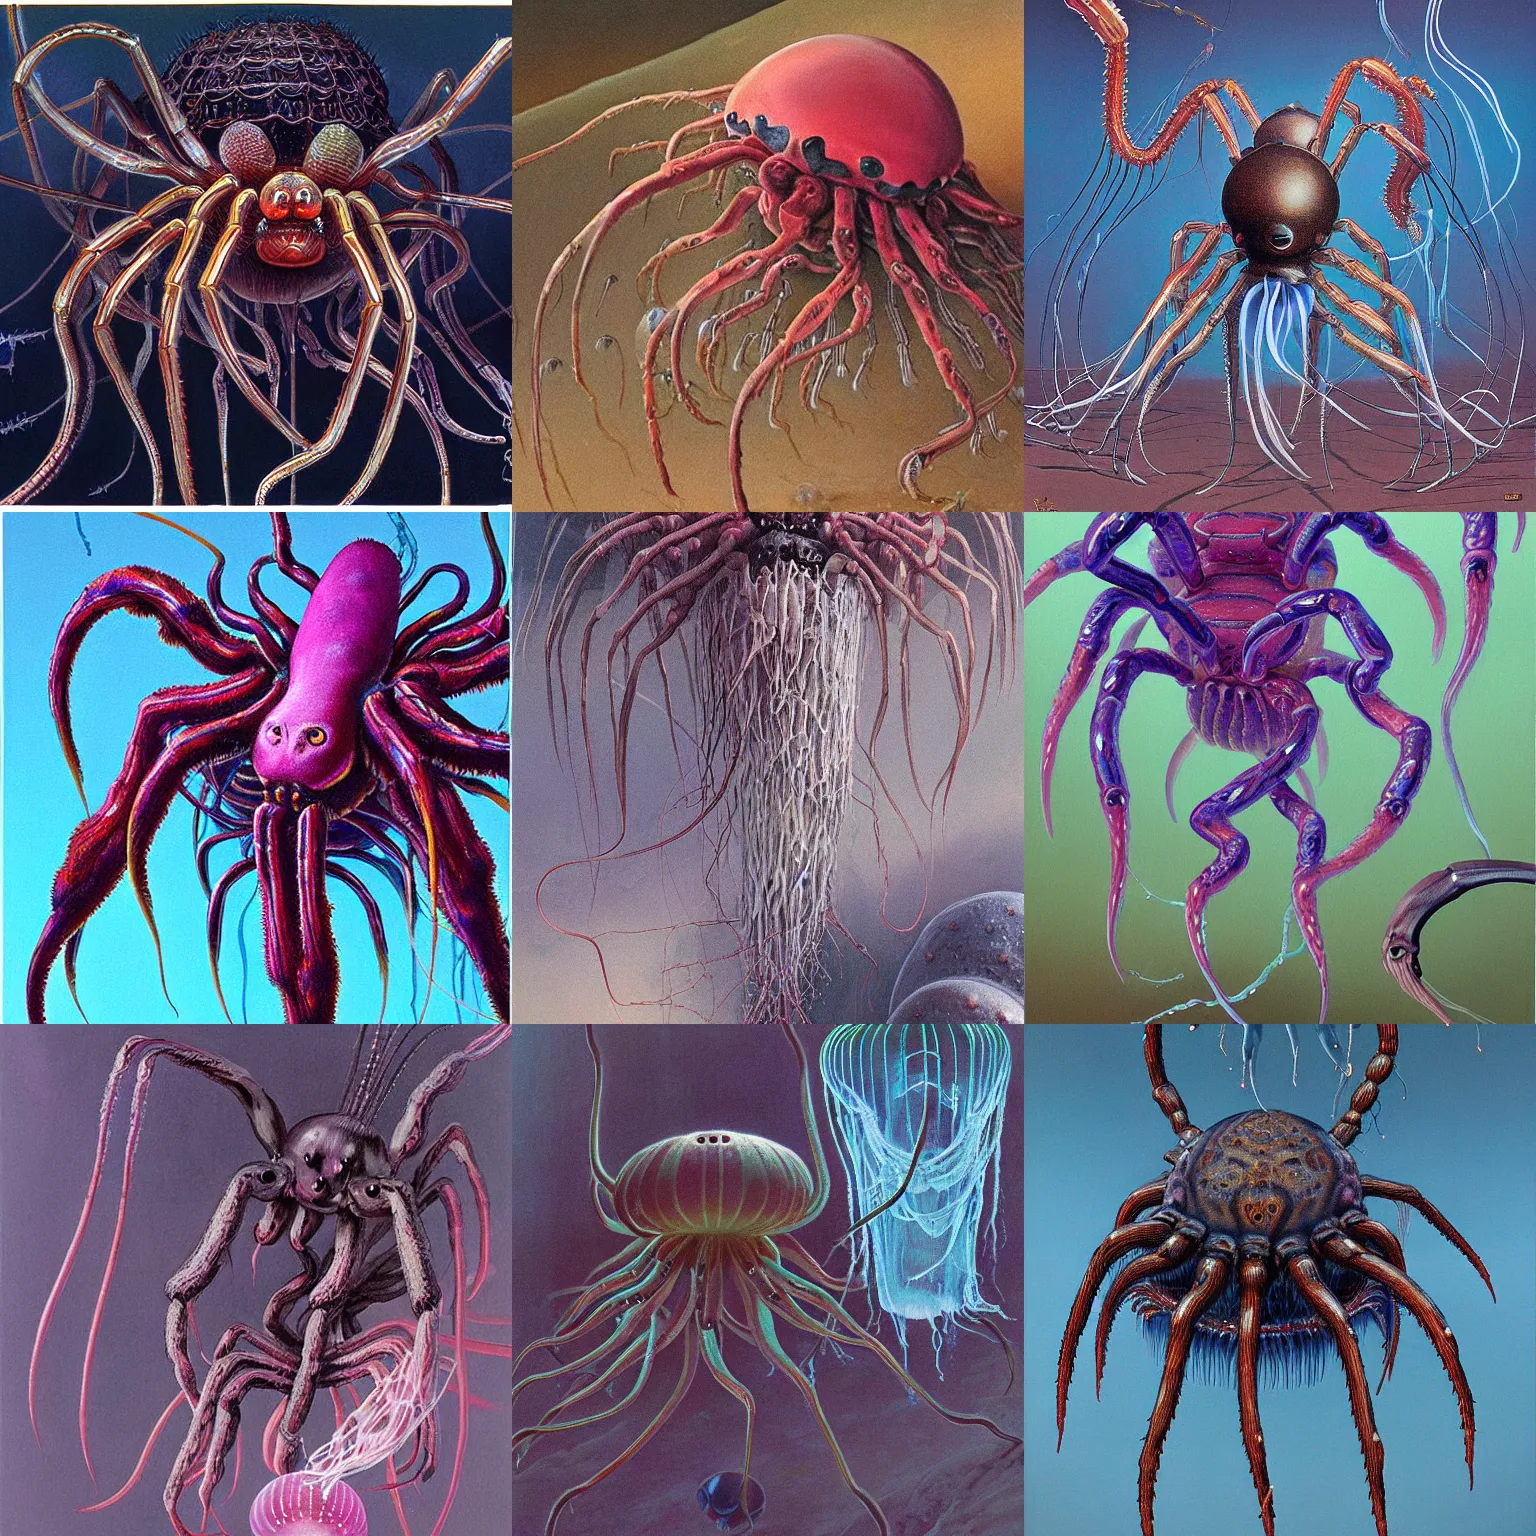 Prompt: painting of arachnid creature with jellyfish look by wayne barlowe